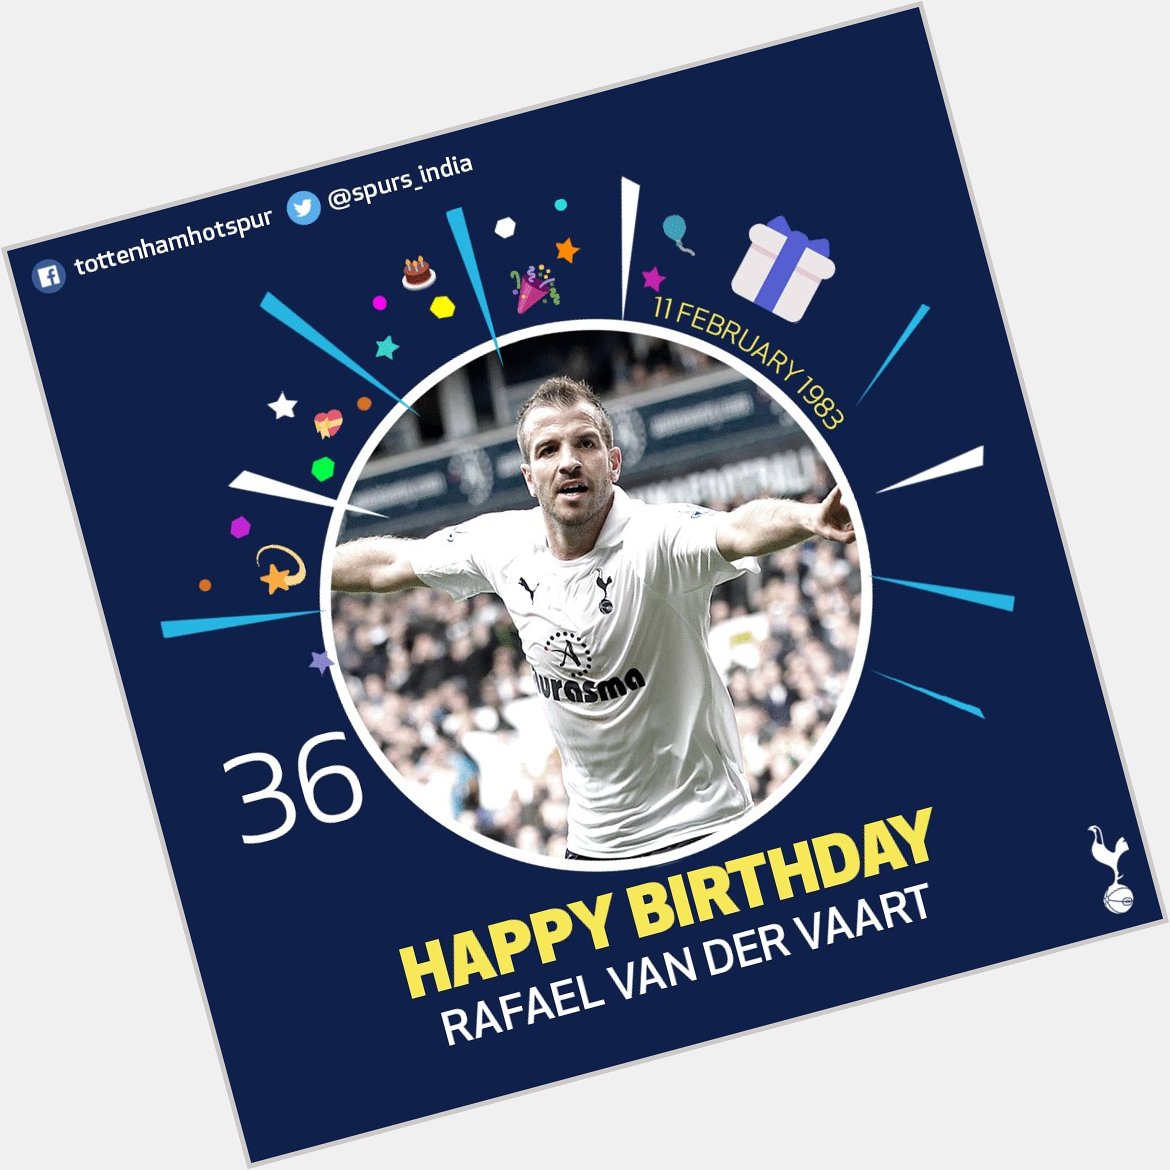   Happy birthday, Rafael van der Vaart!  Tell us your favourite moment in a Spurs shirt!   